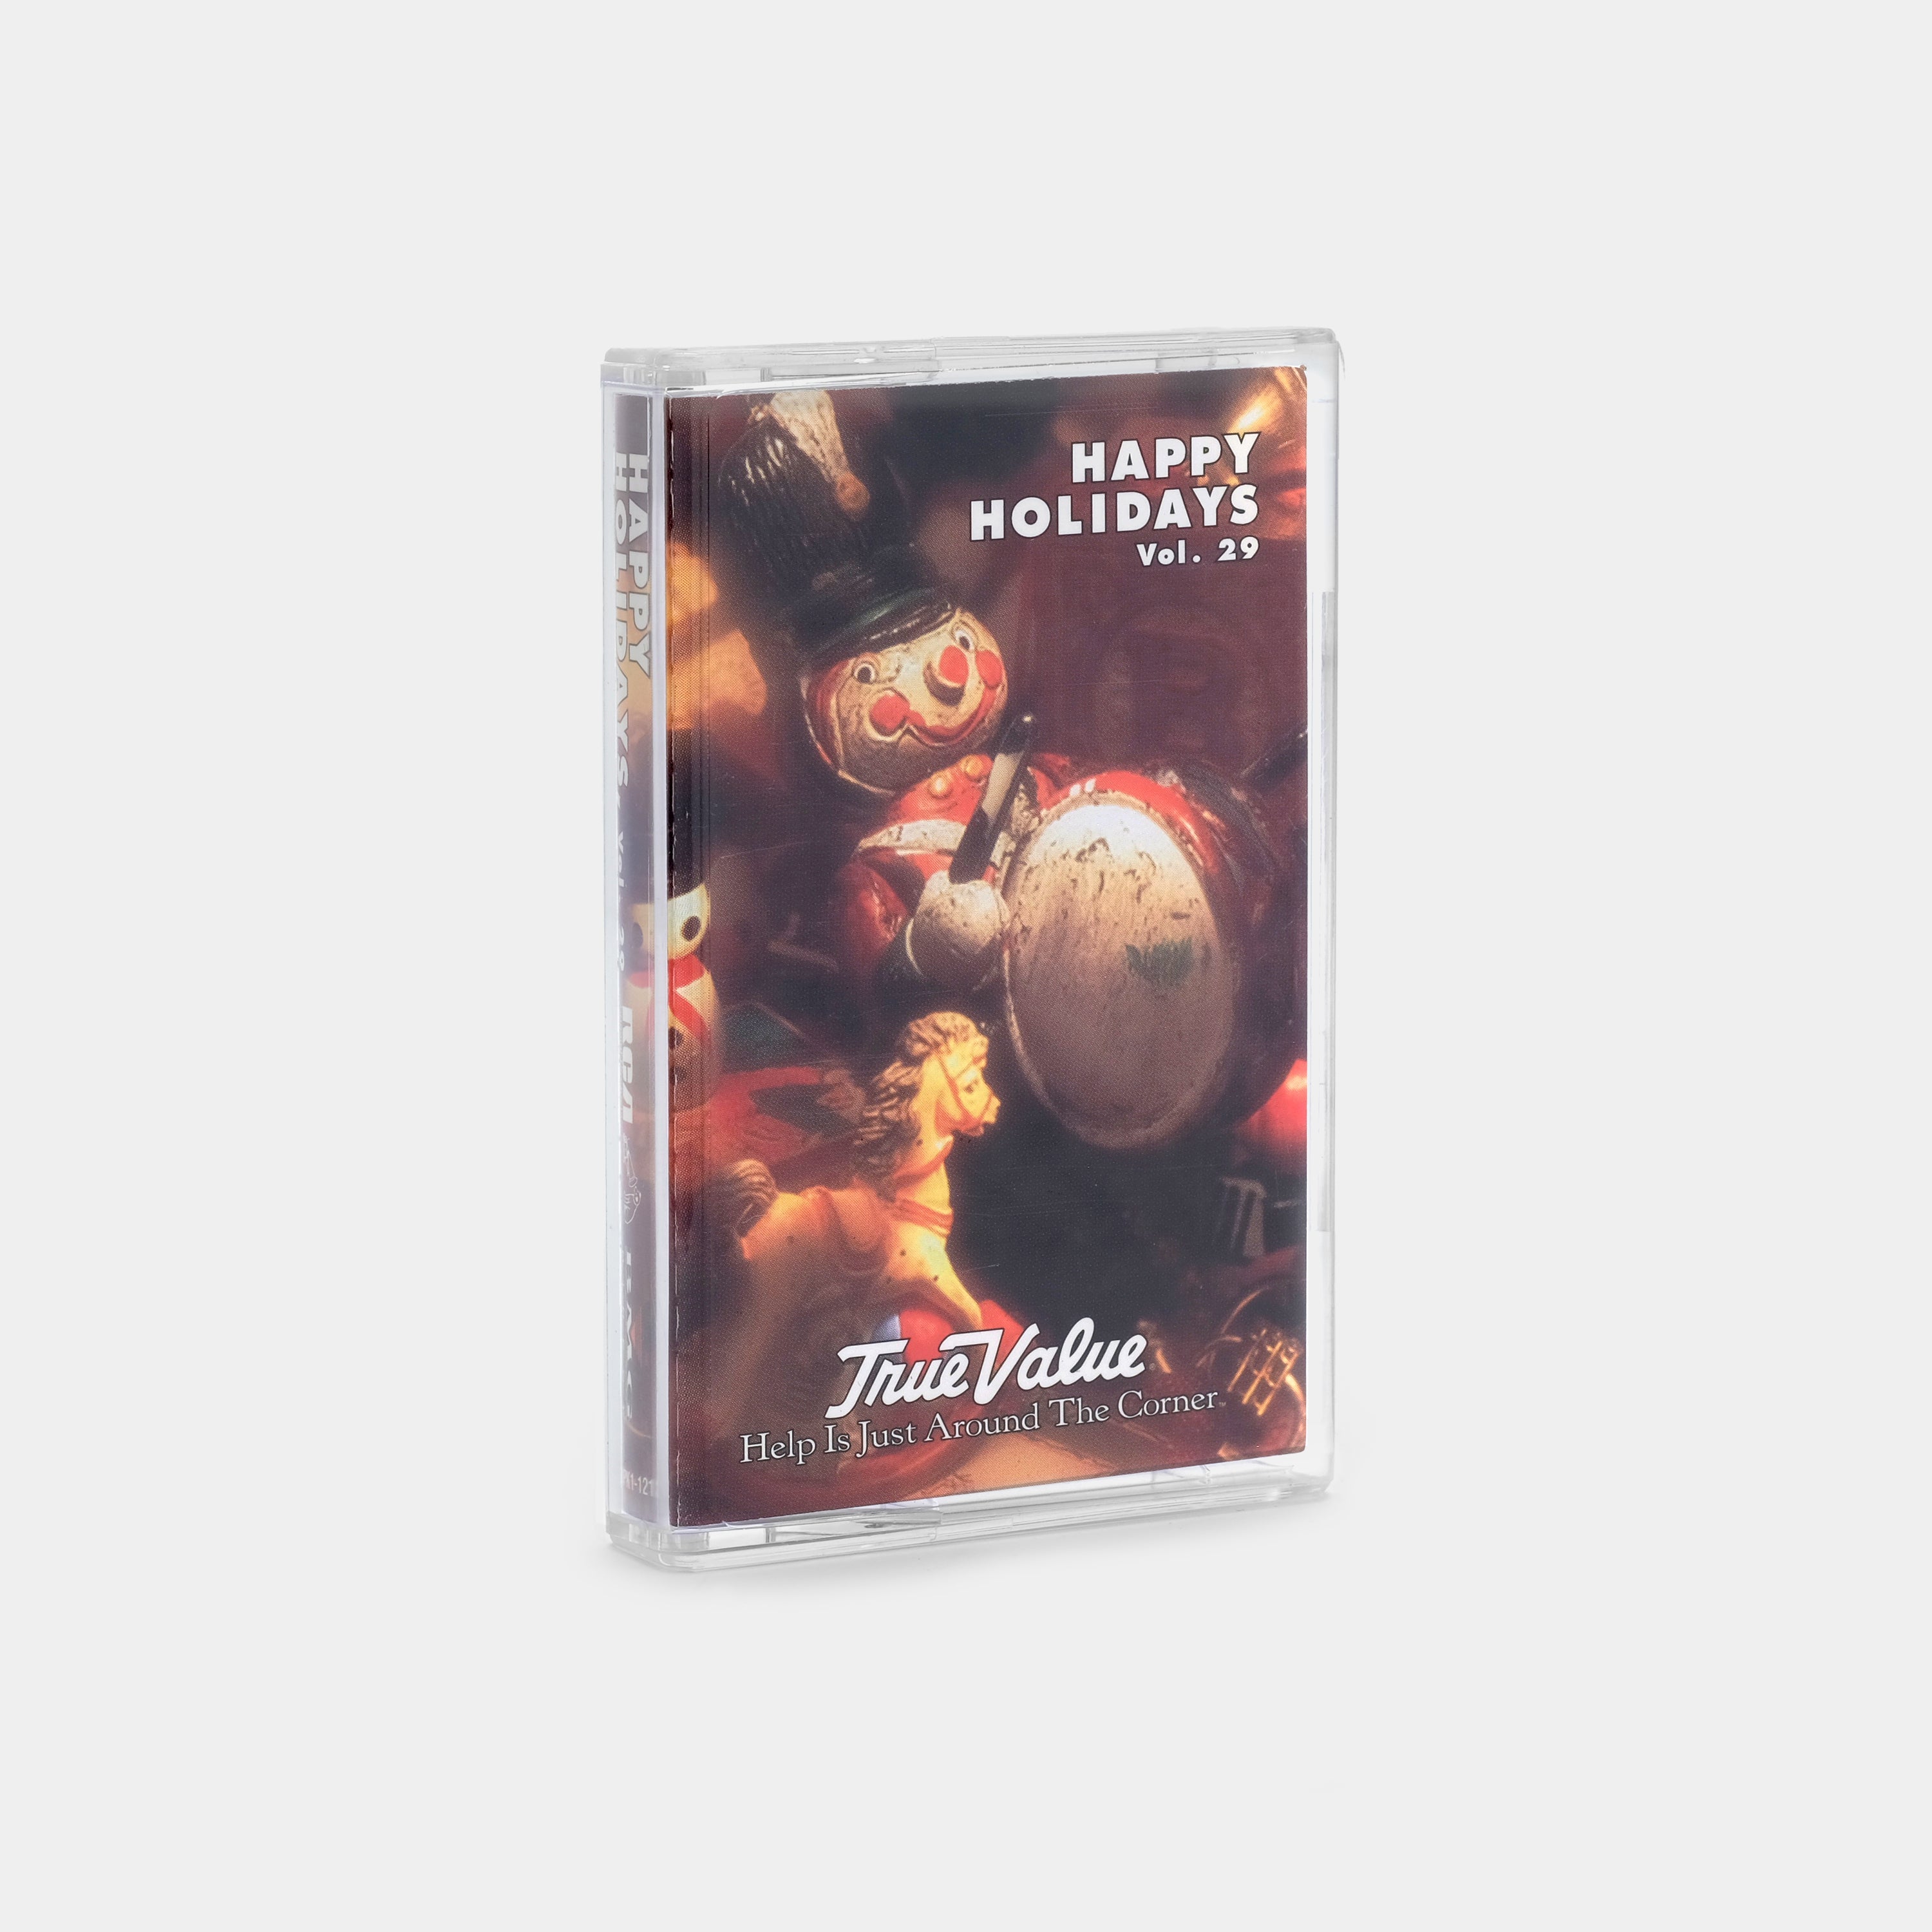 Happy Holidays Vol. 29 Cassette Tape